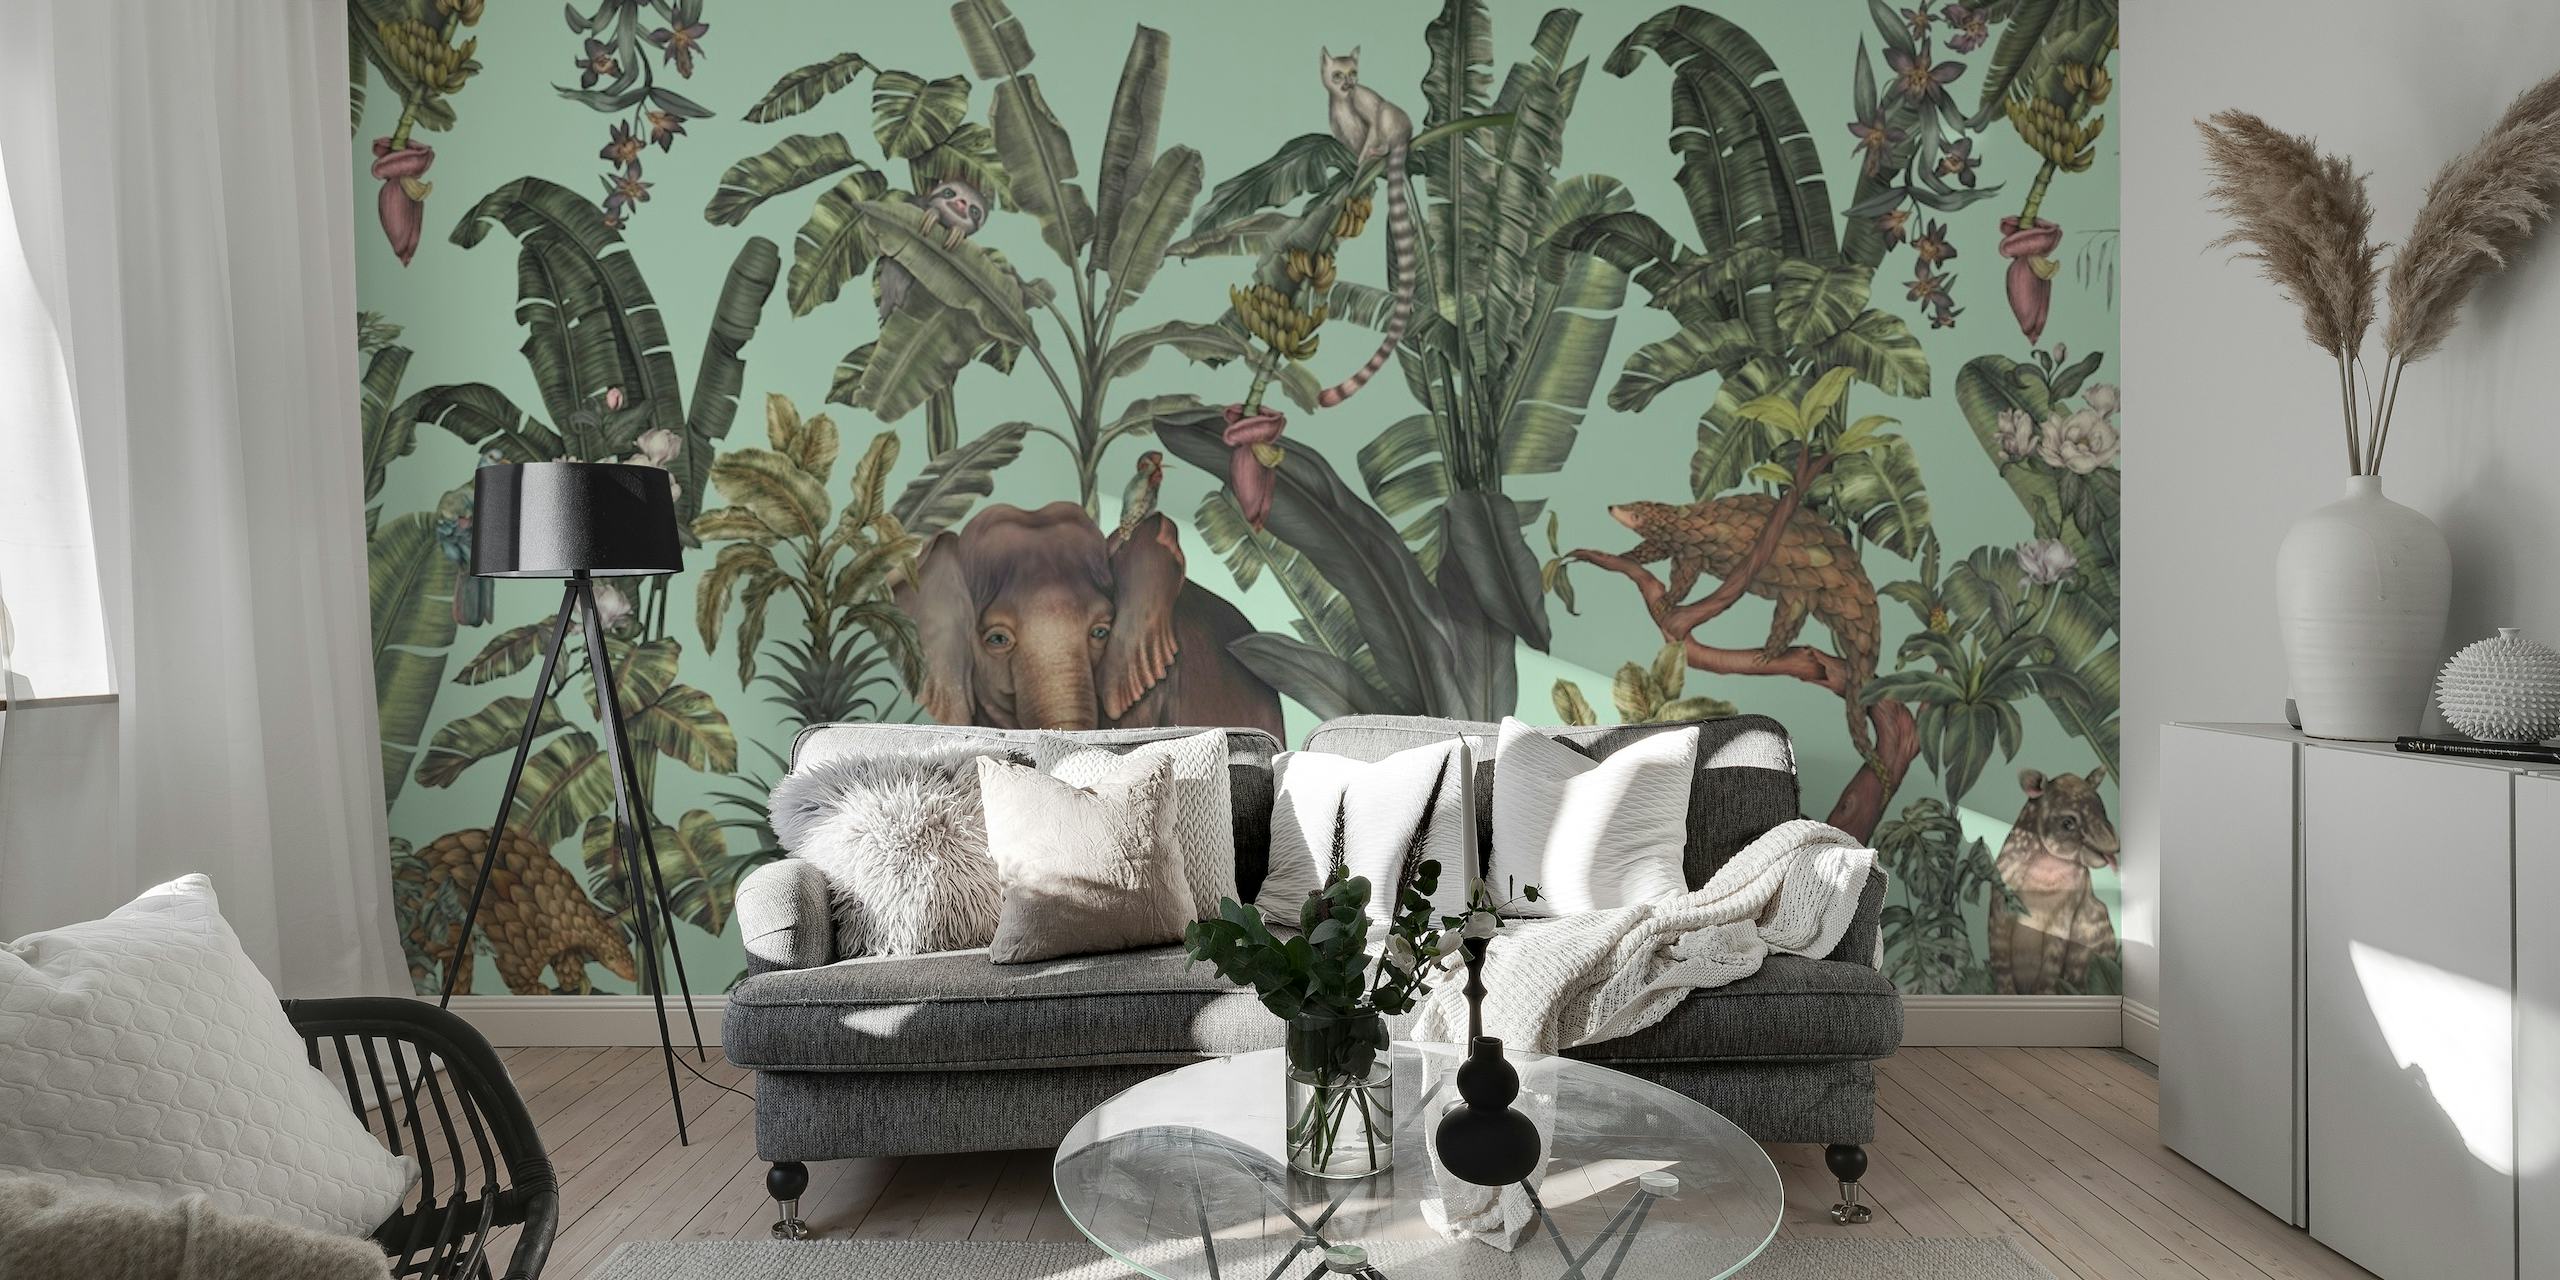 Light green jungle-themed wall mural featuring tropical flora and hidden wildlife